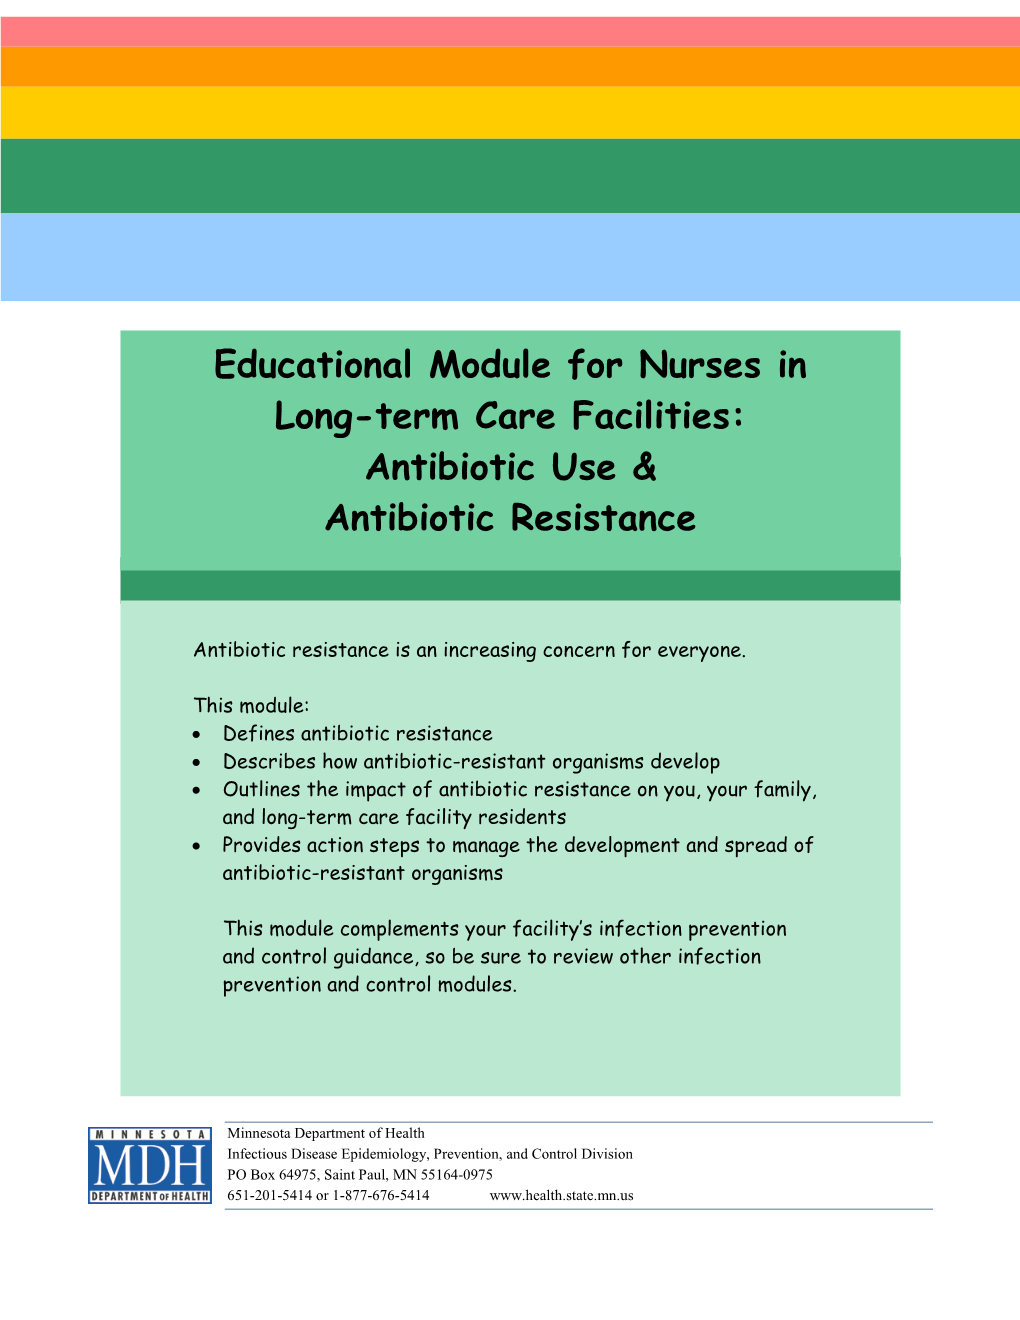 • Educational Module for Nurses in Long-Term Care Facilities: Antibiotic